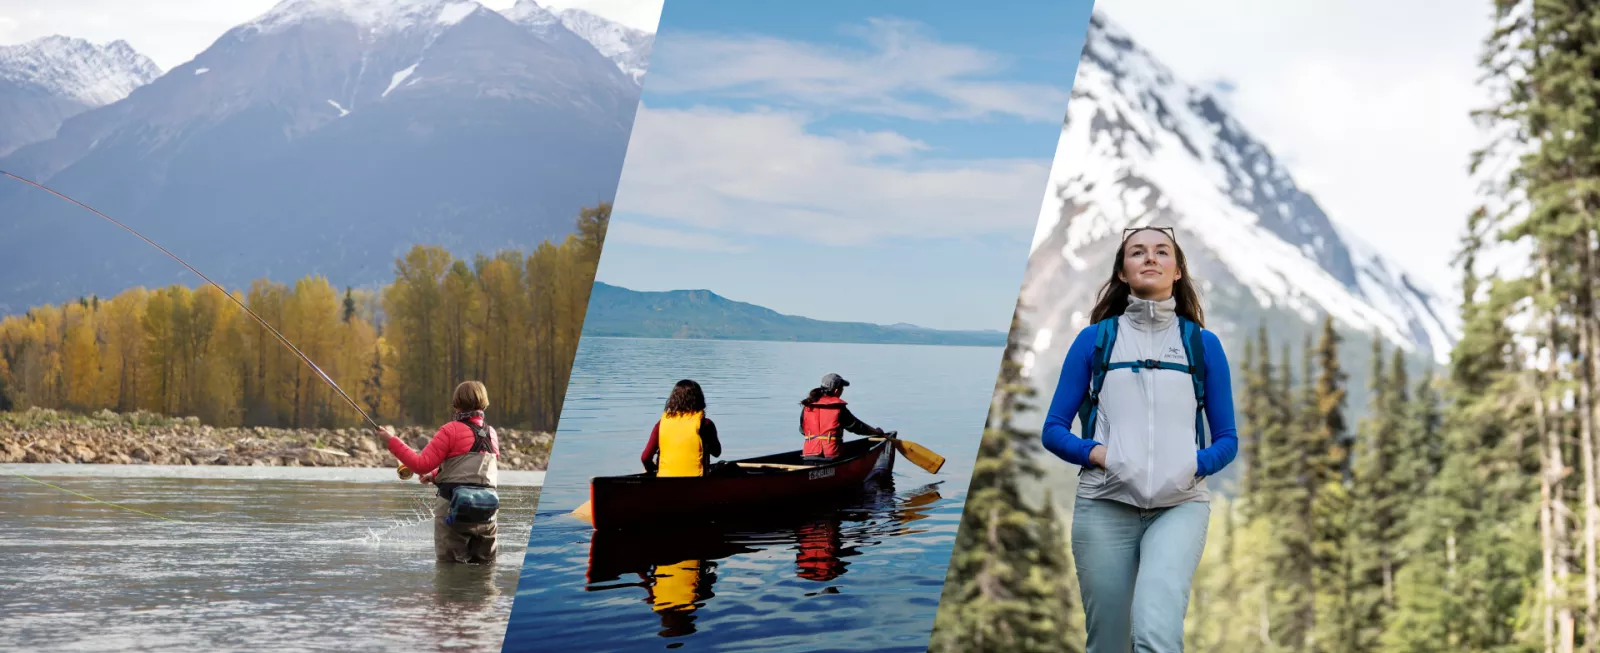 multiple images of people doing outdoor activities in British Columbia